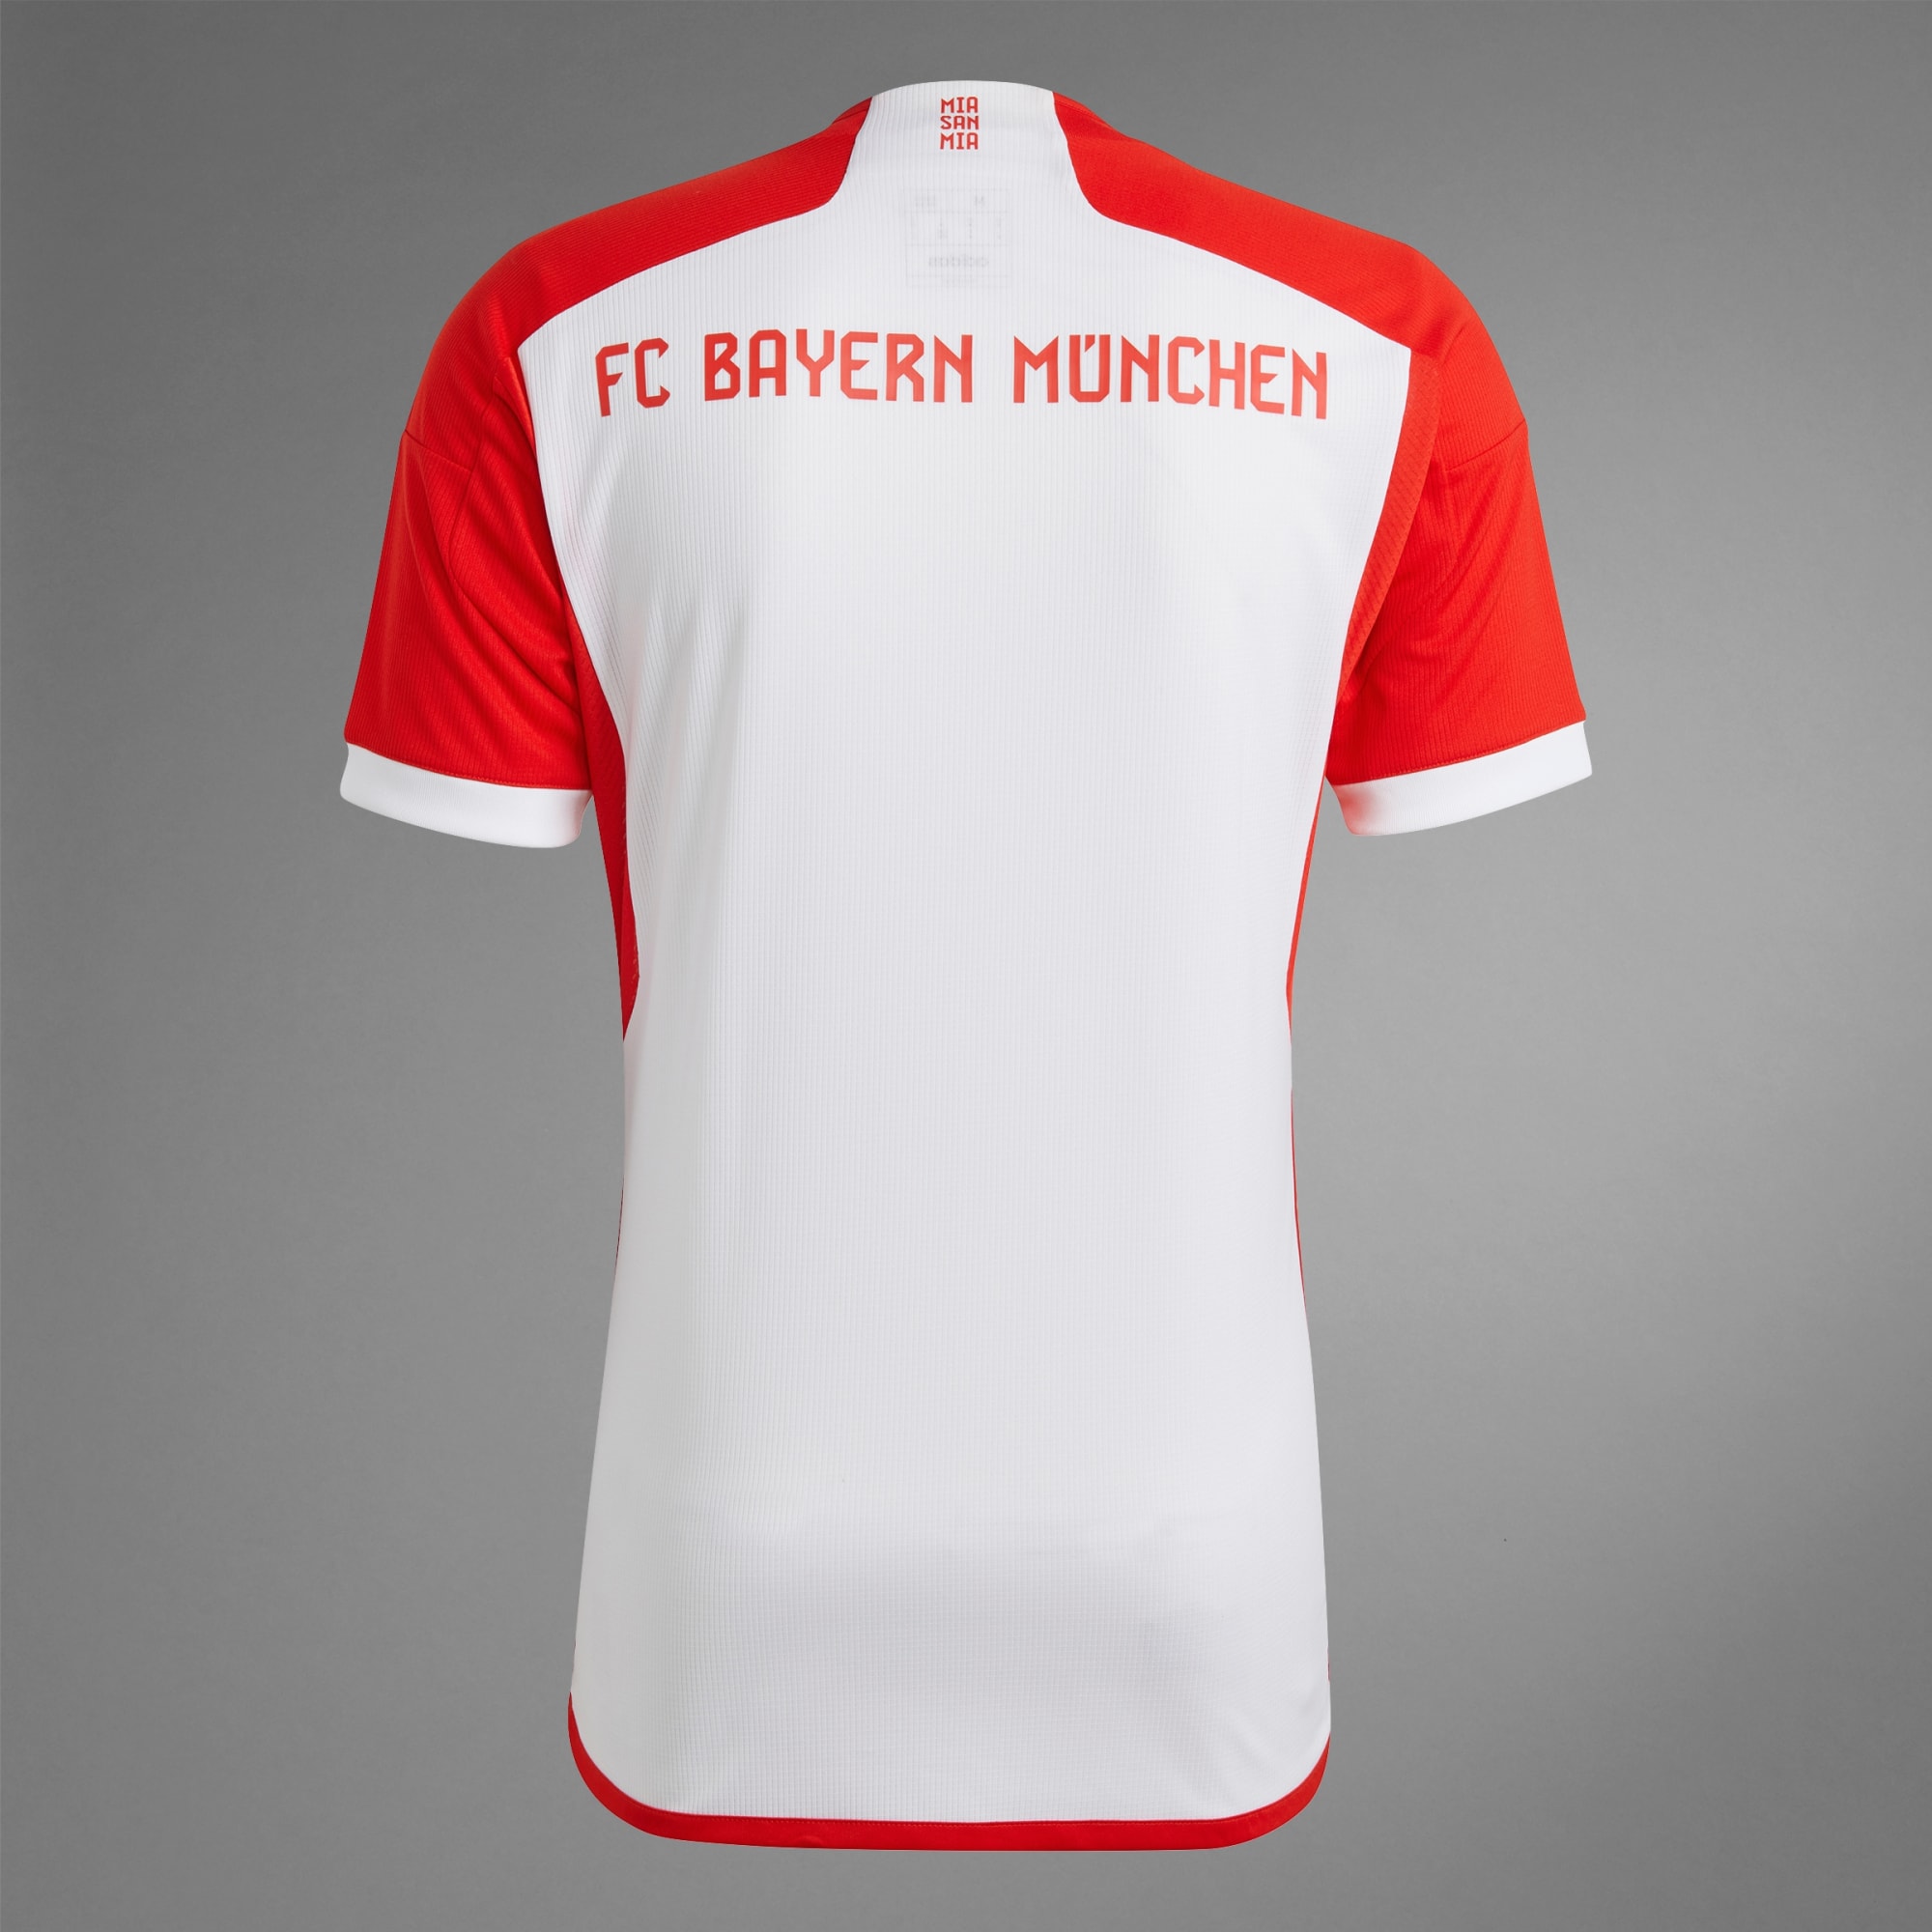 bayern munich jerseys over the years